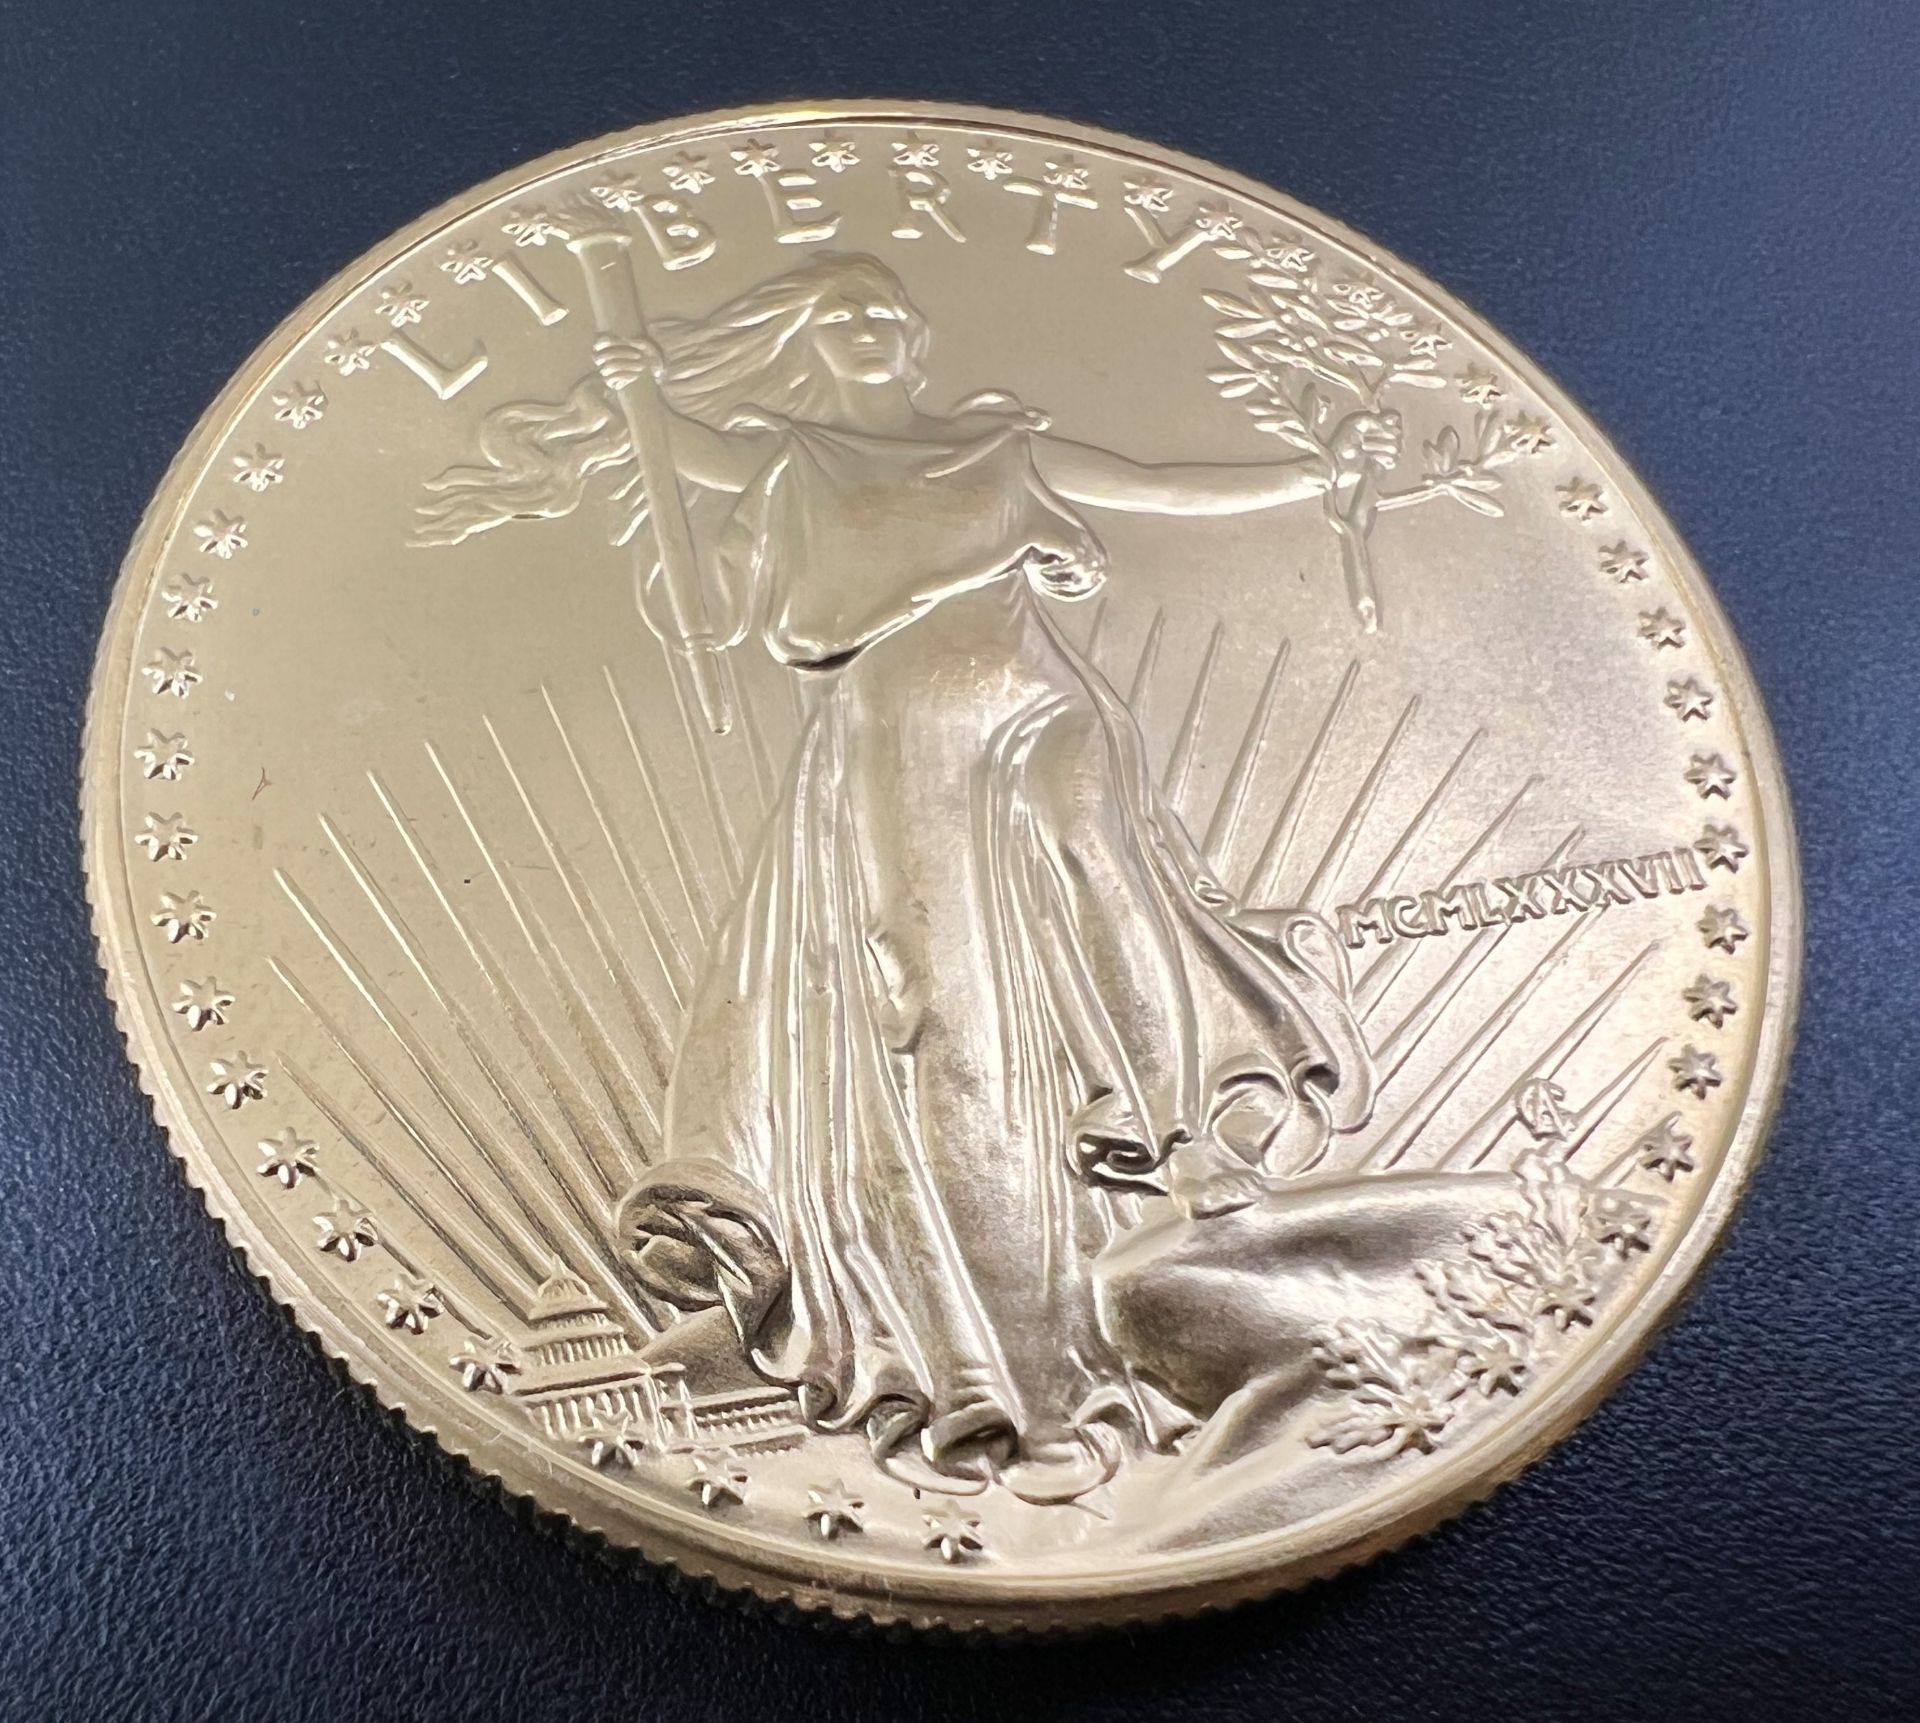 Goldmünze 50 Dollars "Liberty". USA 1987. - Bild 2 aus 5